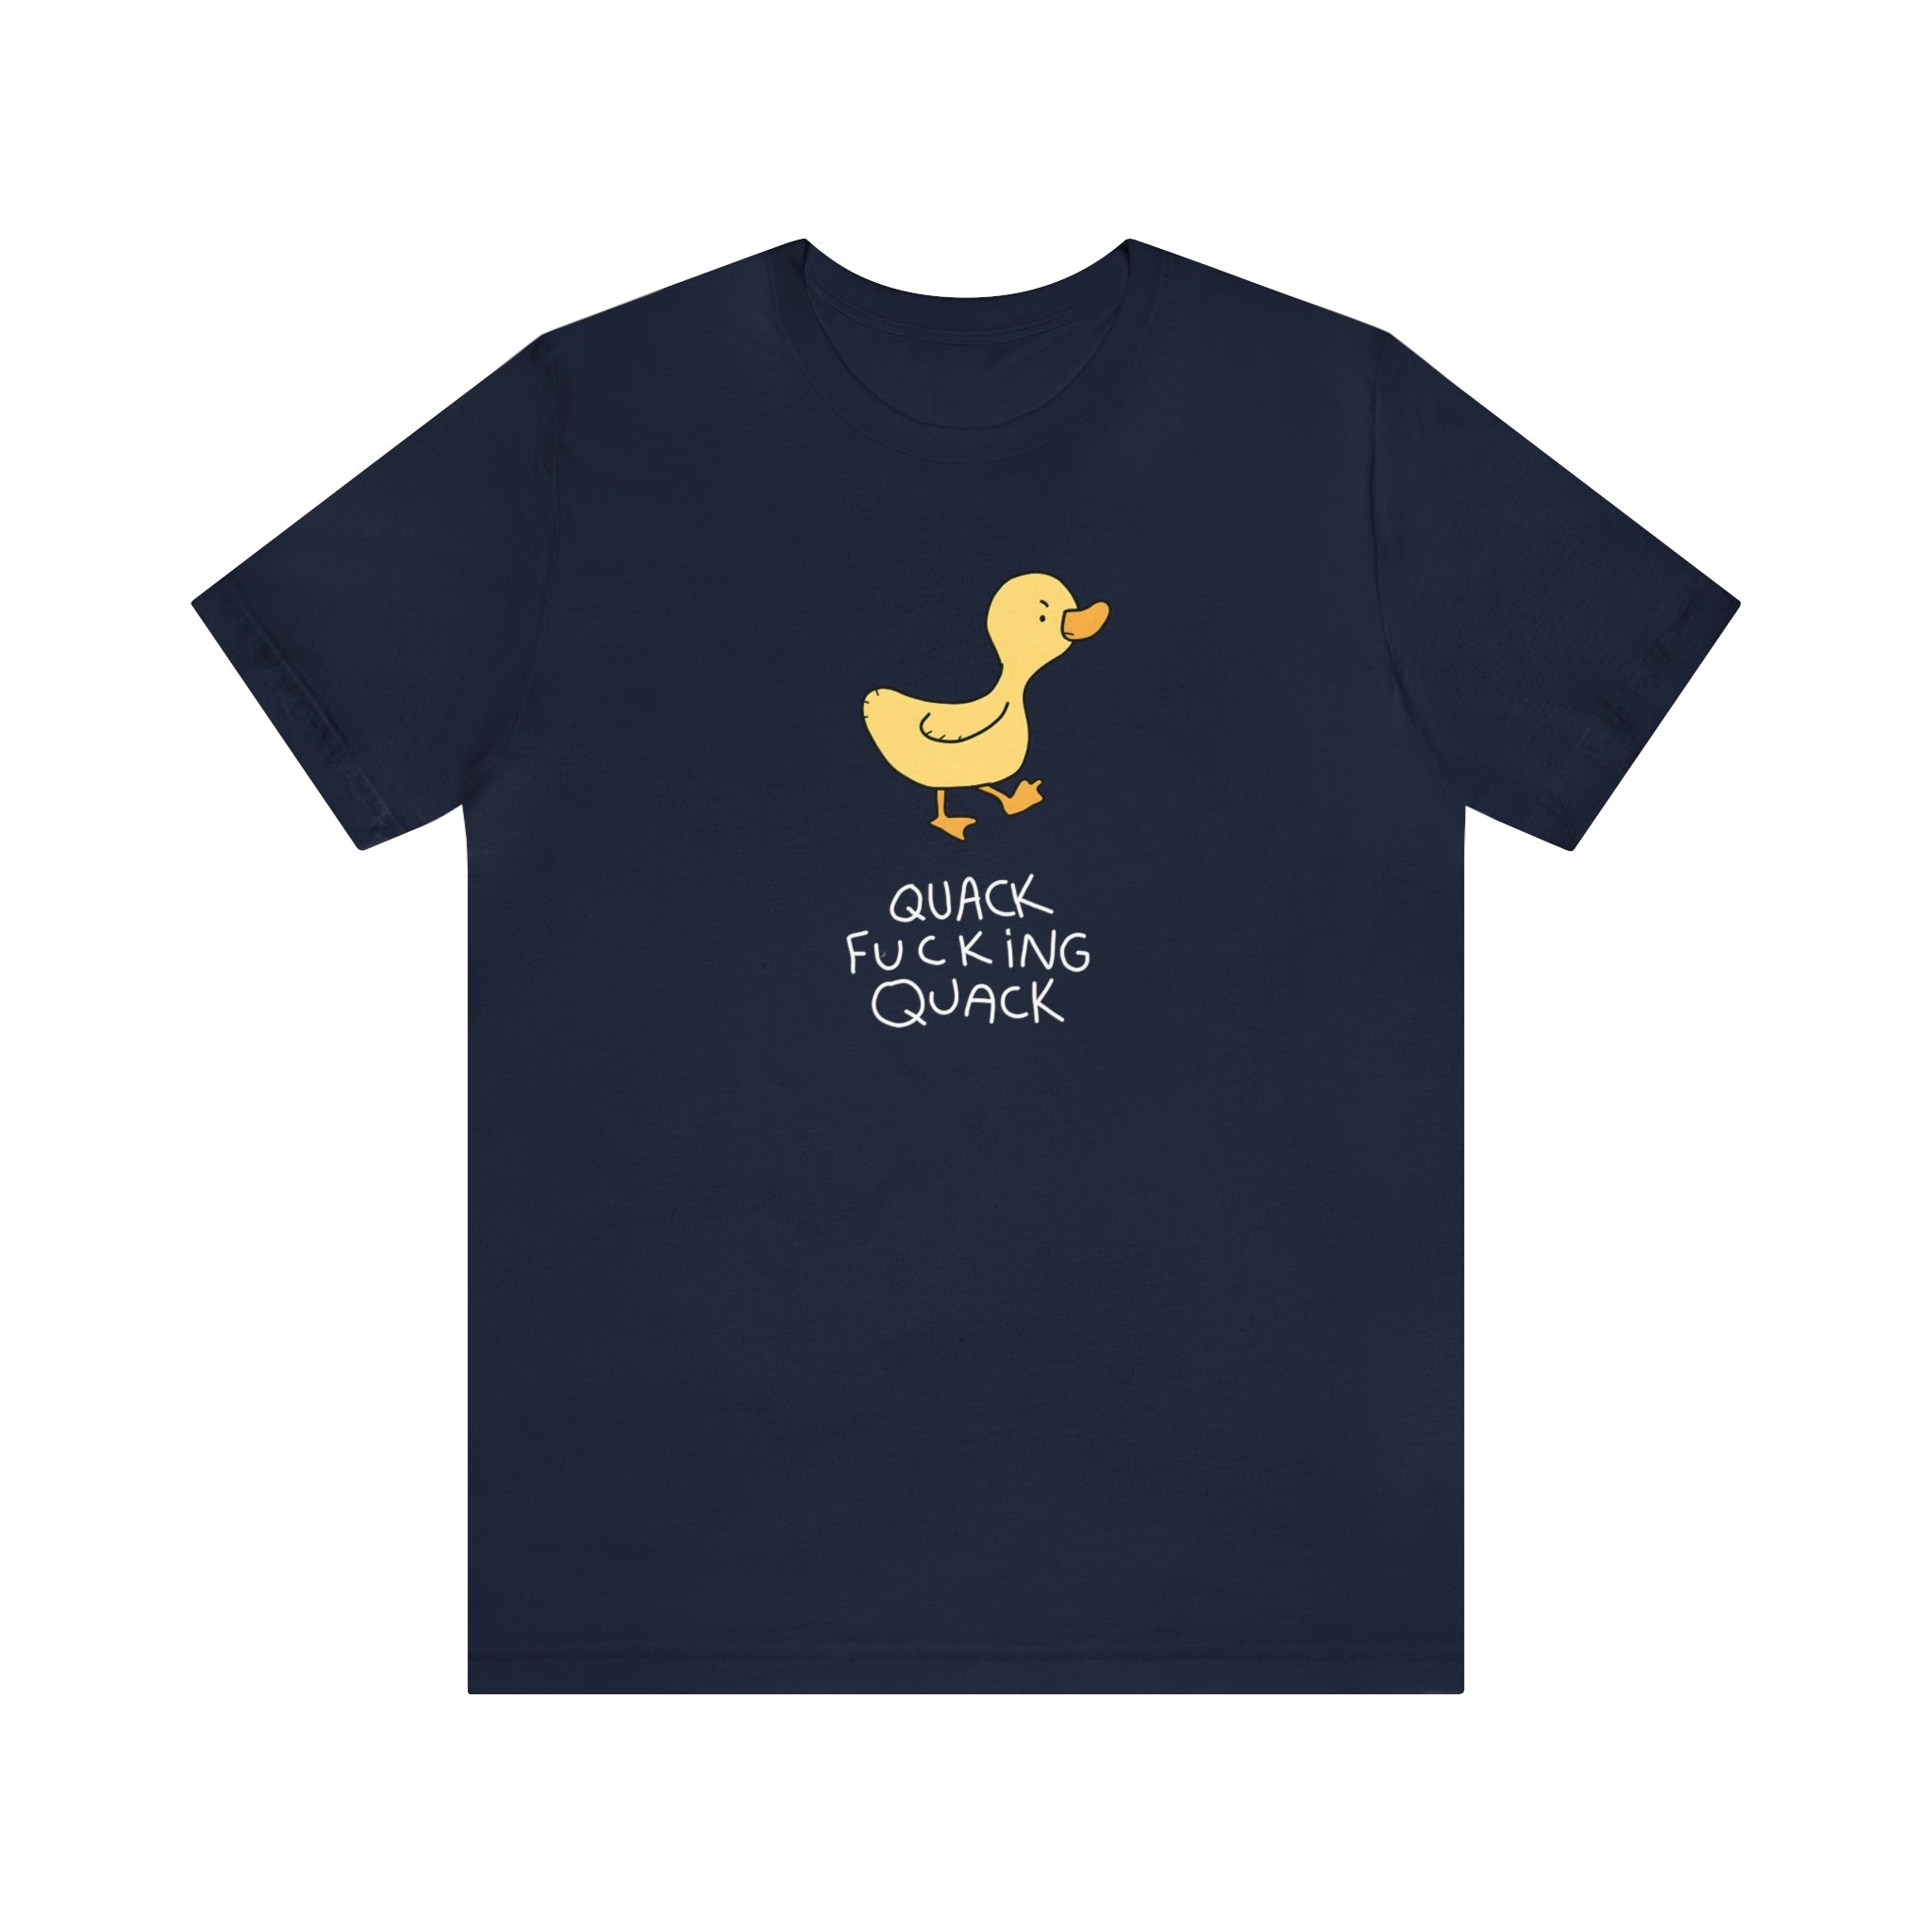 Quack F**king Quack : Unisex 100% Comfy Cotton T-Shirt by Bella+Canvas